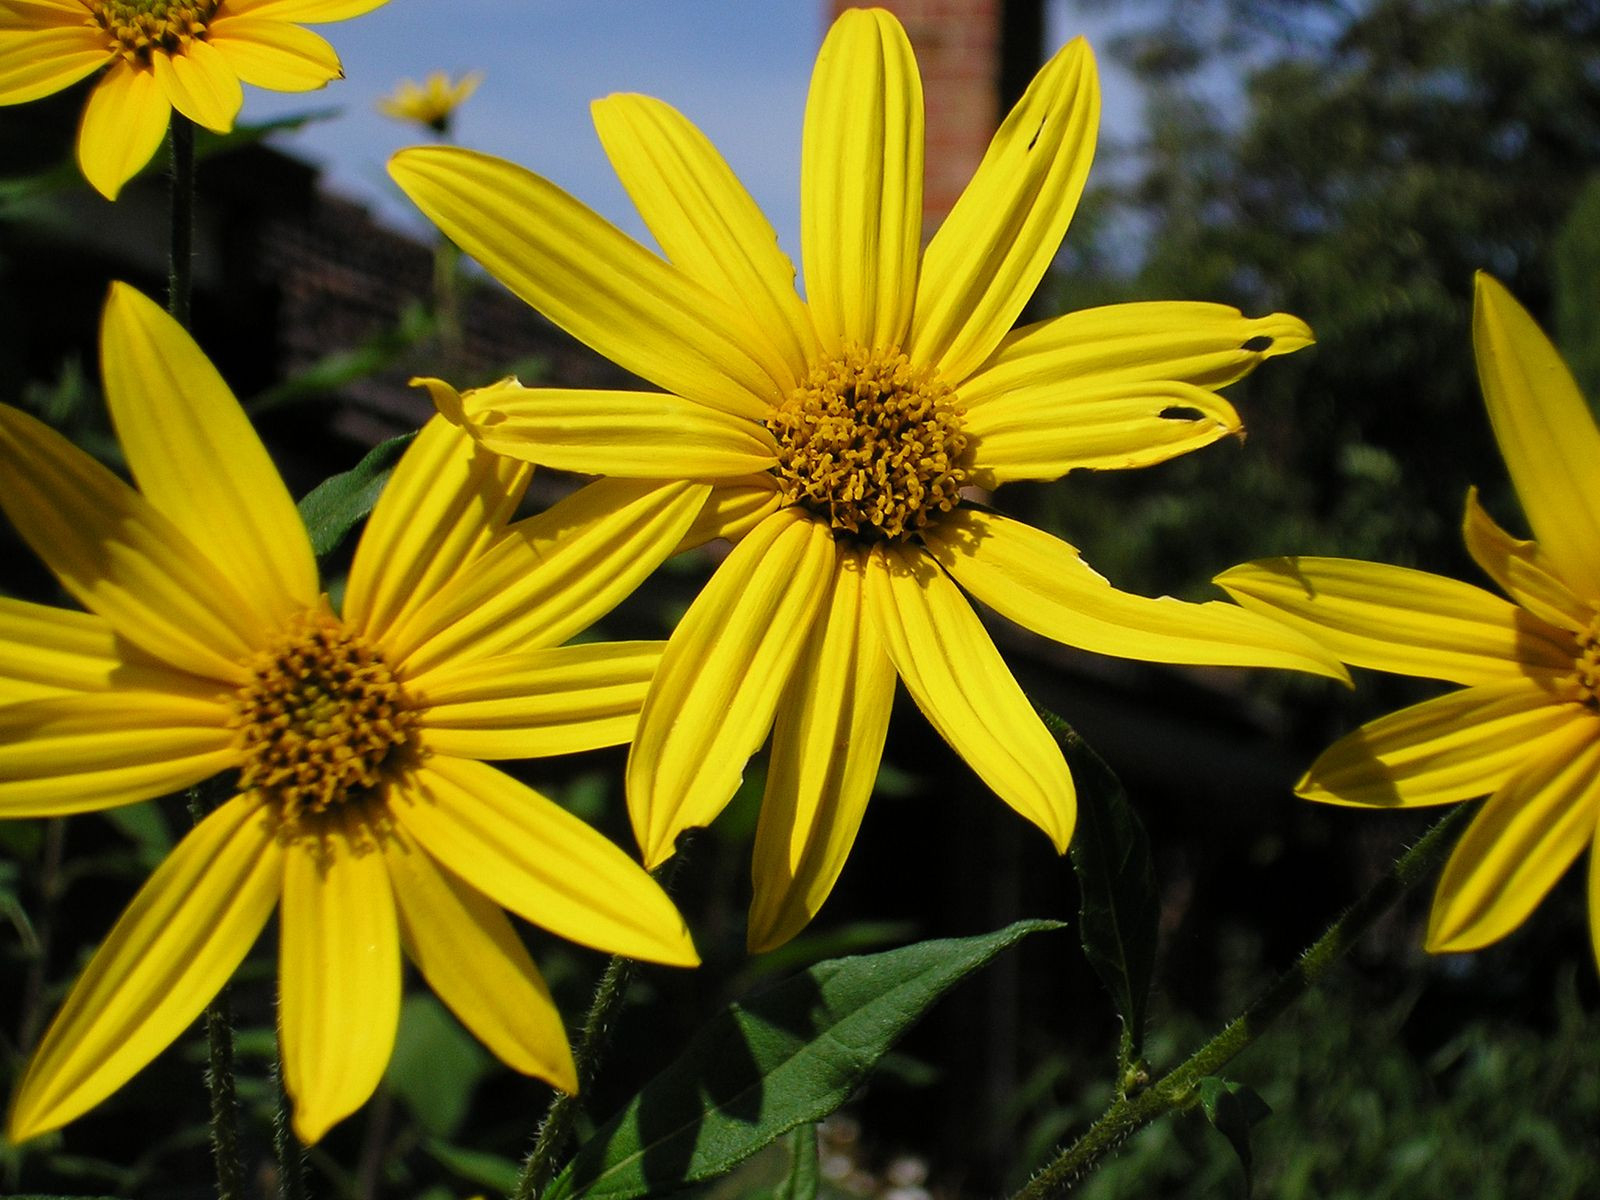 Sunflower | Description, Uses, & Facts | Britannica